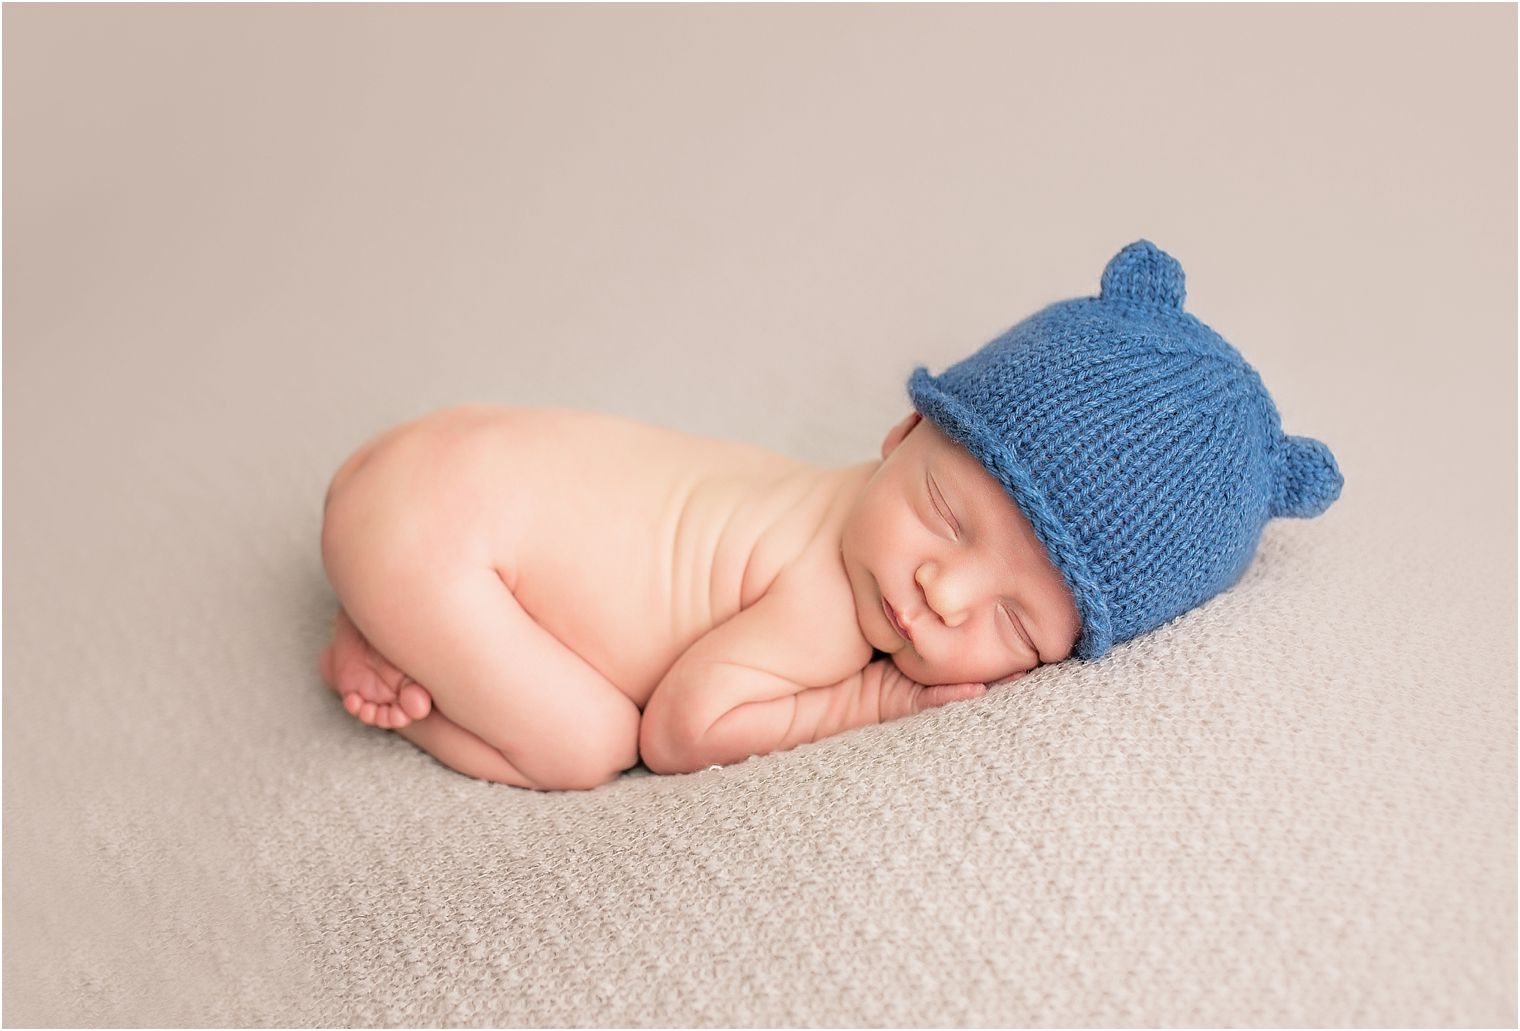 Newborn baby boy with knit hat